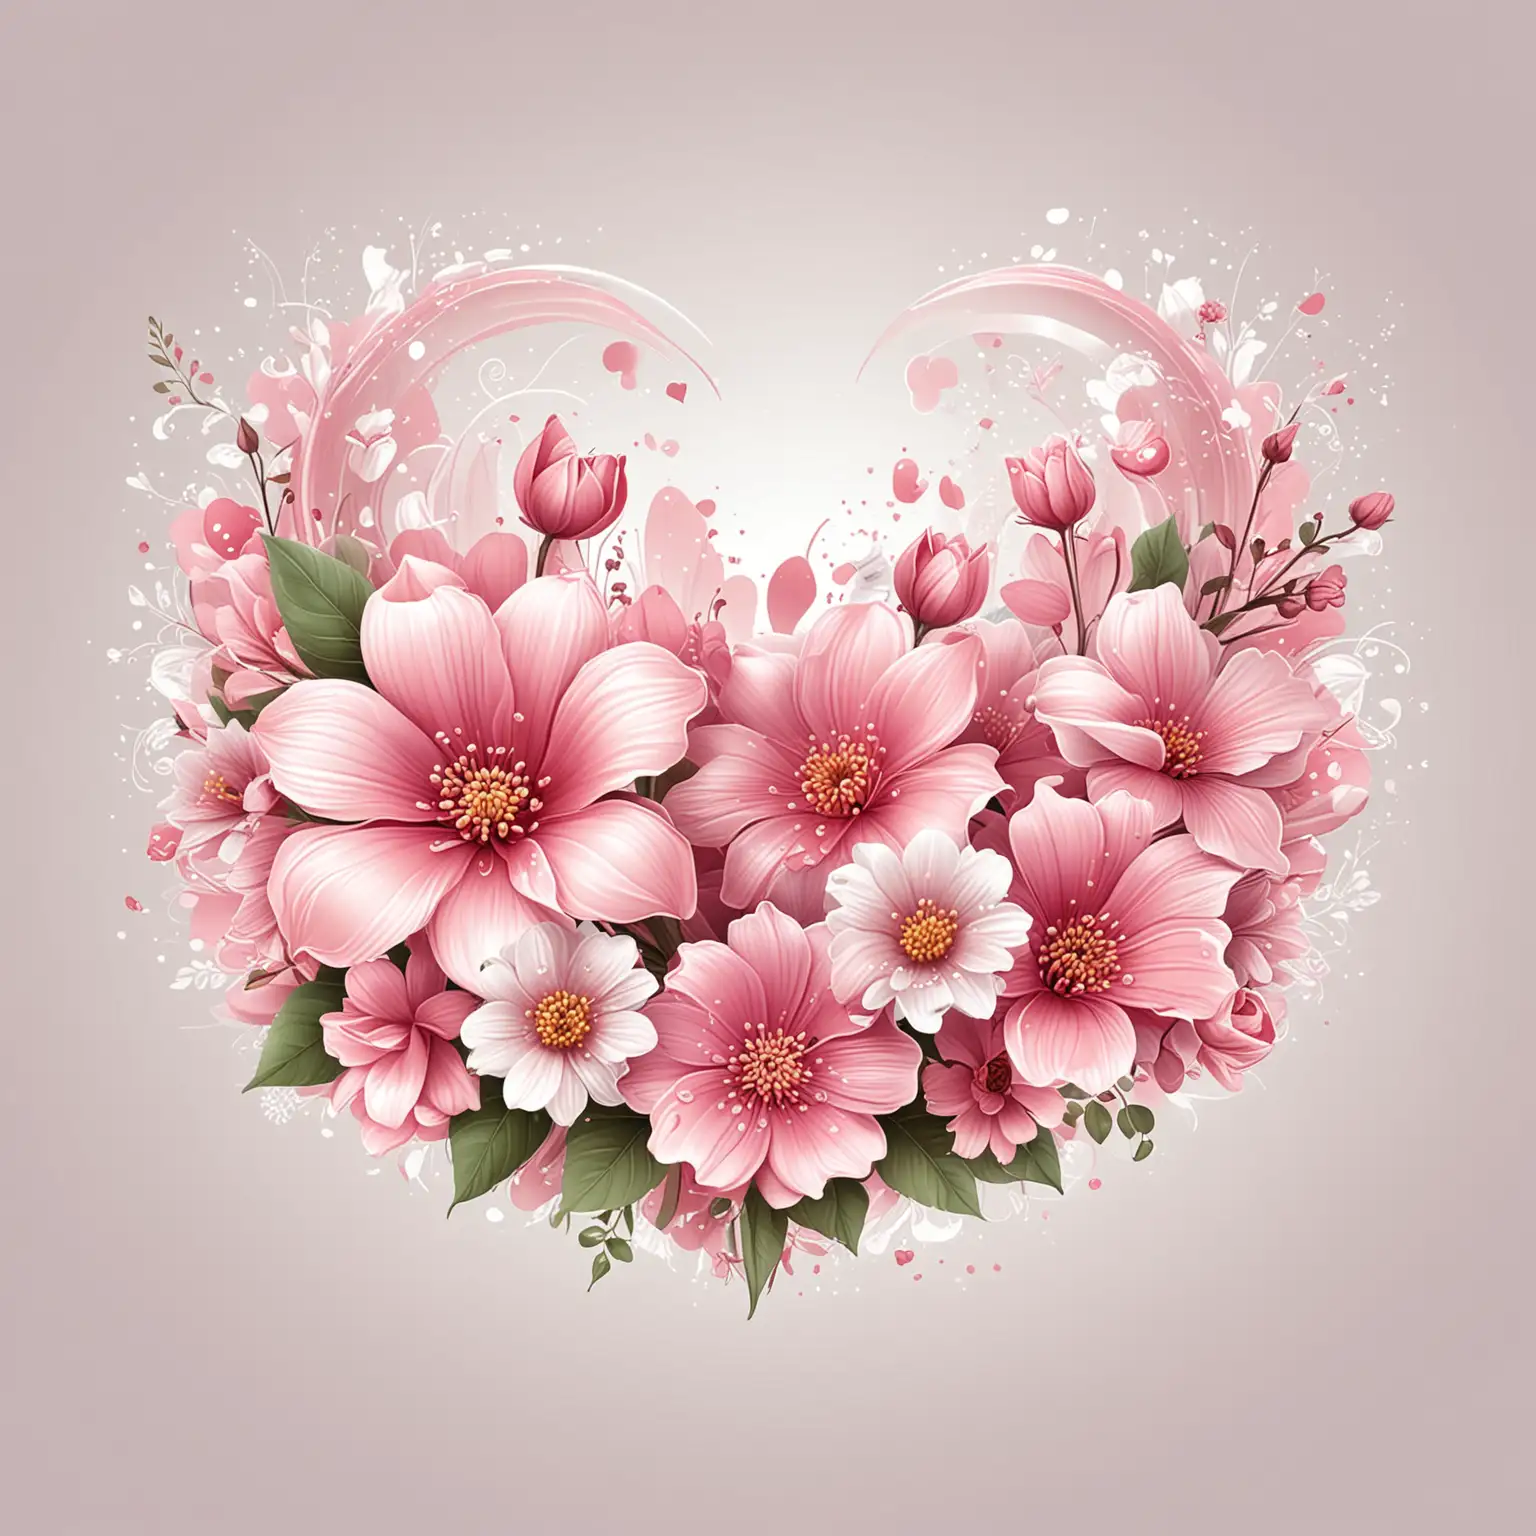 Enchanting Pink Valentine Flowers in Fairytale Vector Illustration